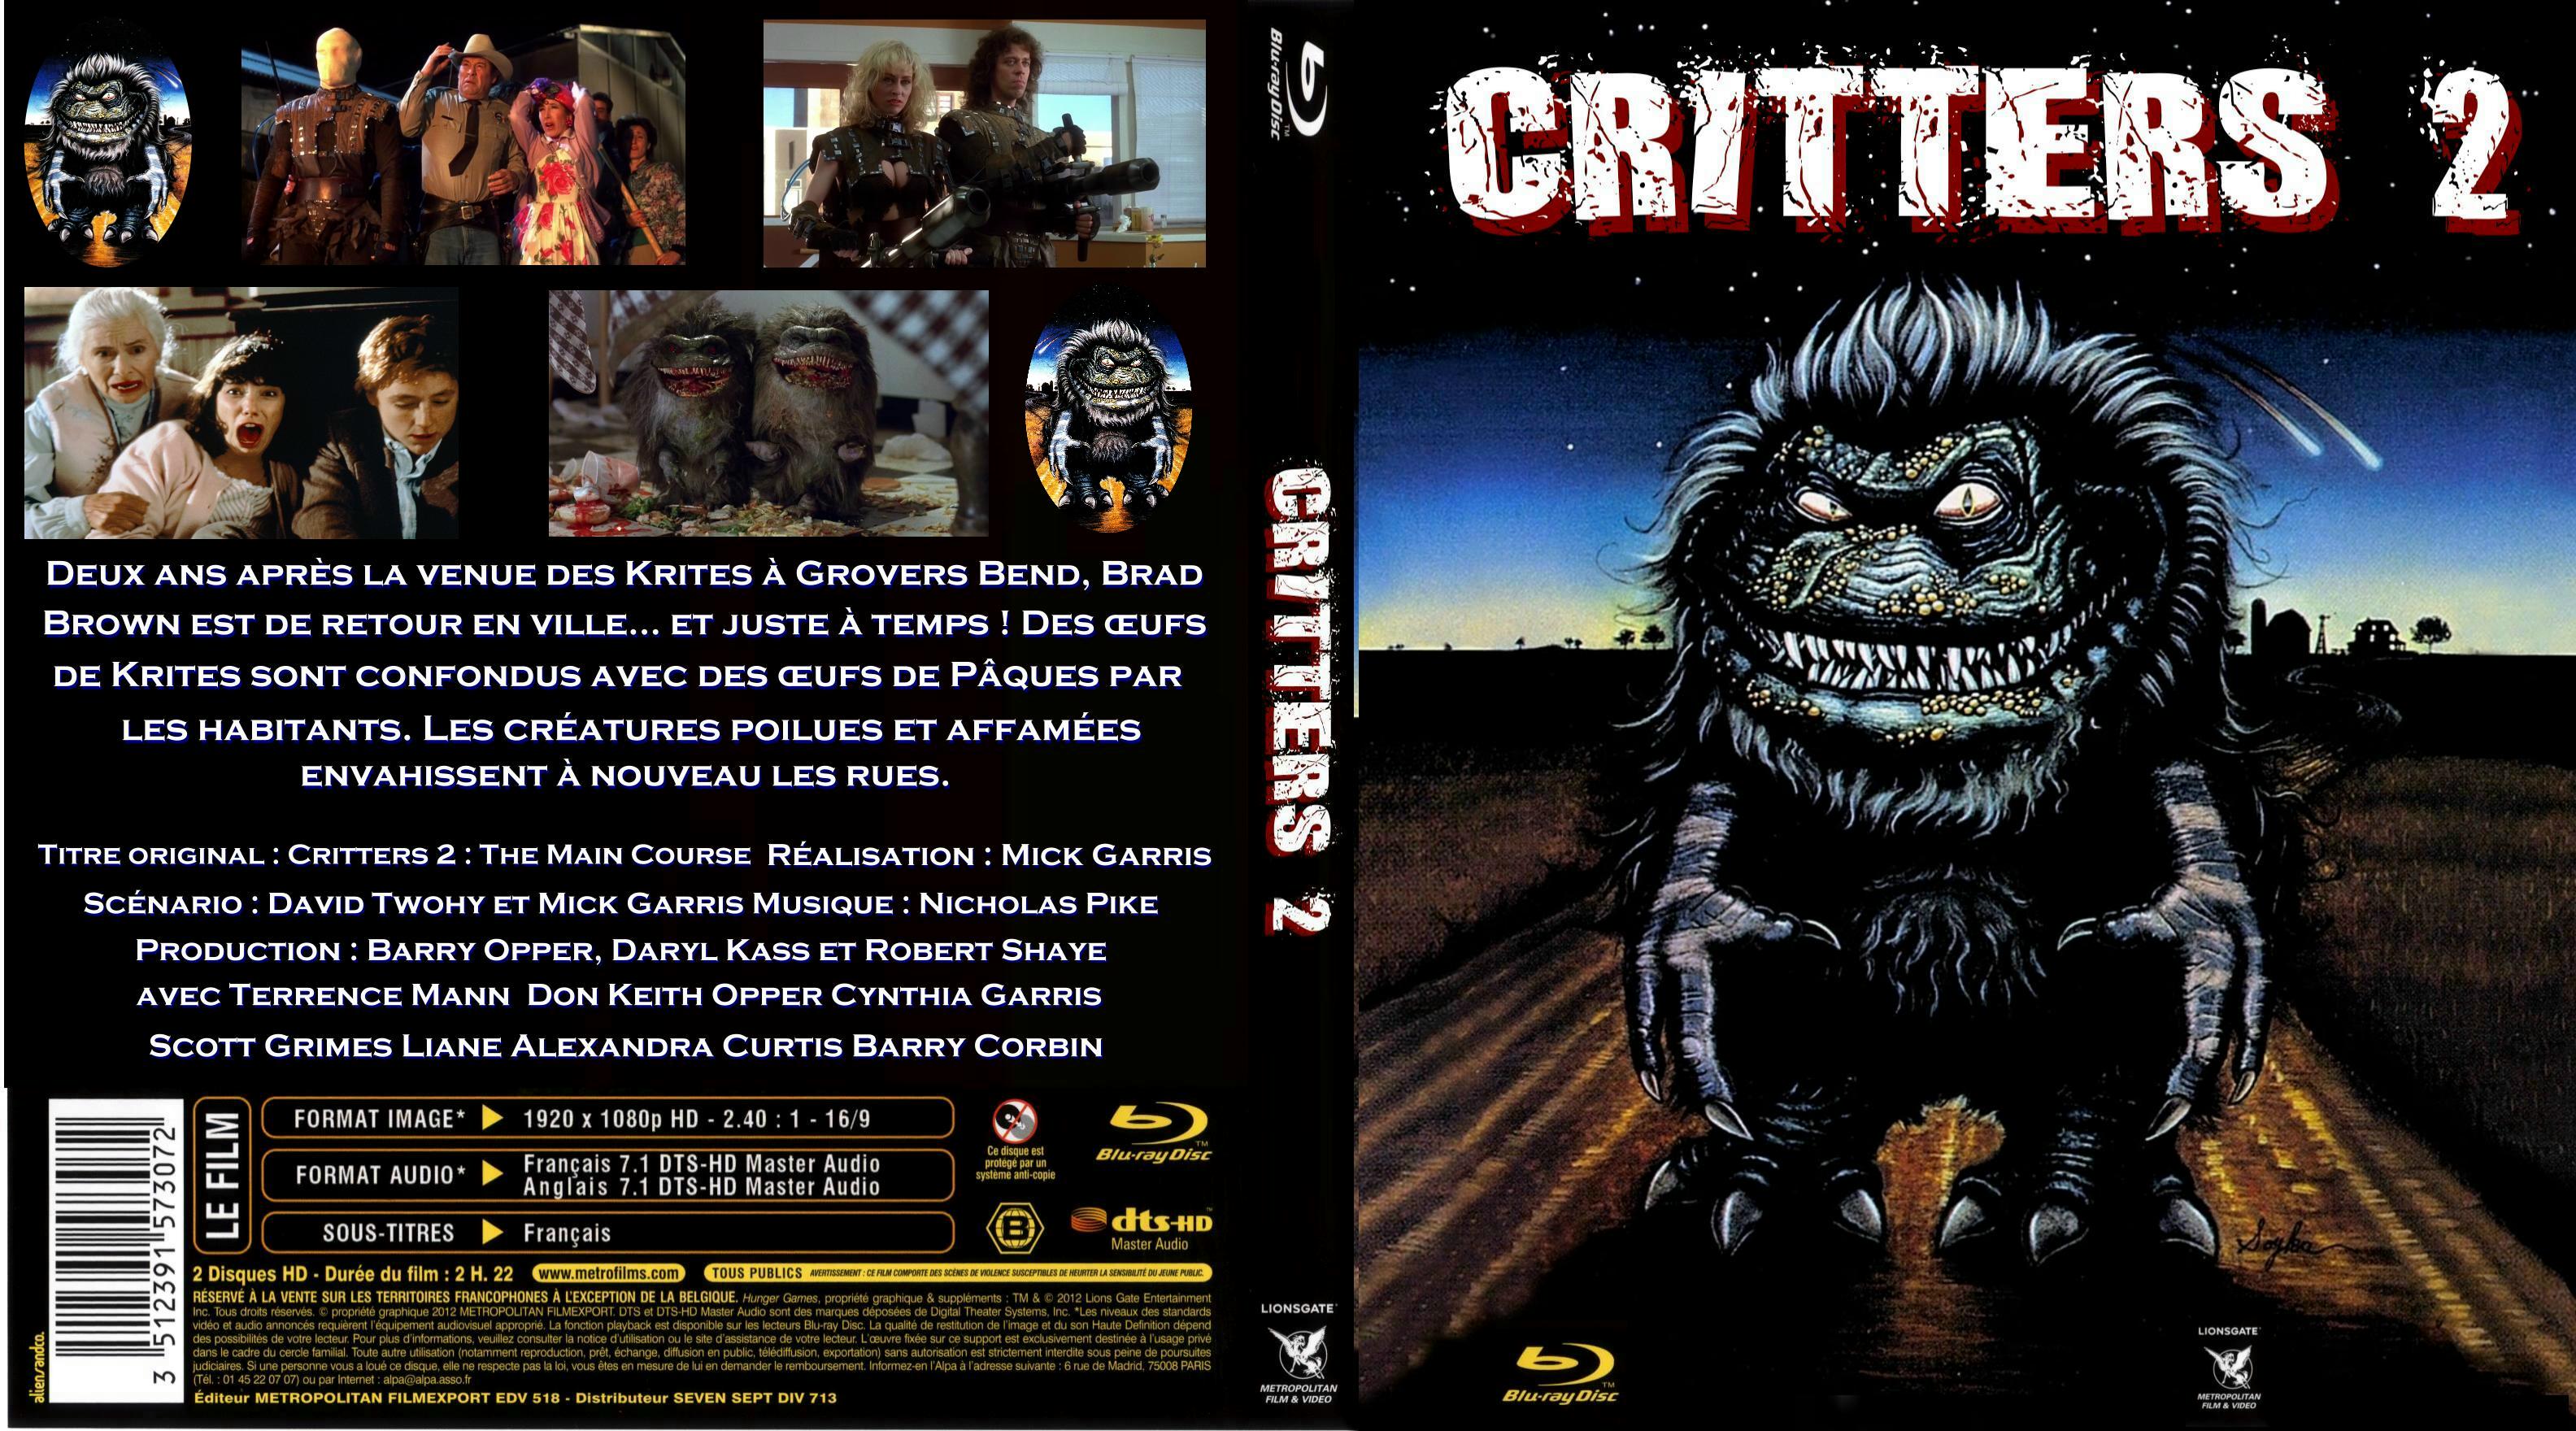 Jaquette DVD Critters 2 custom (BLU-RAY)